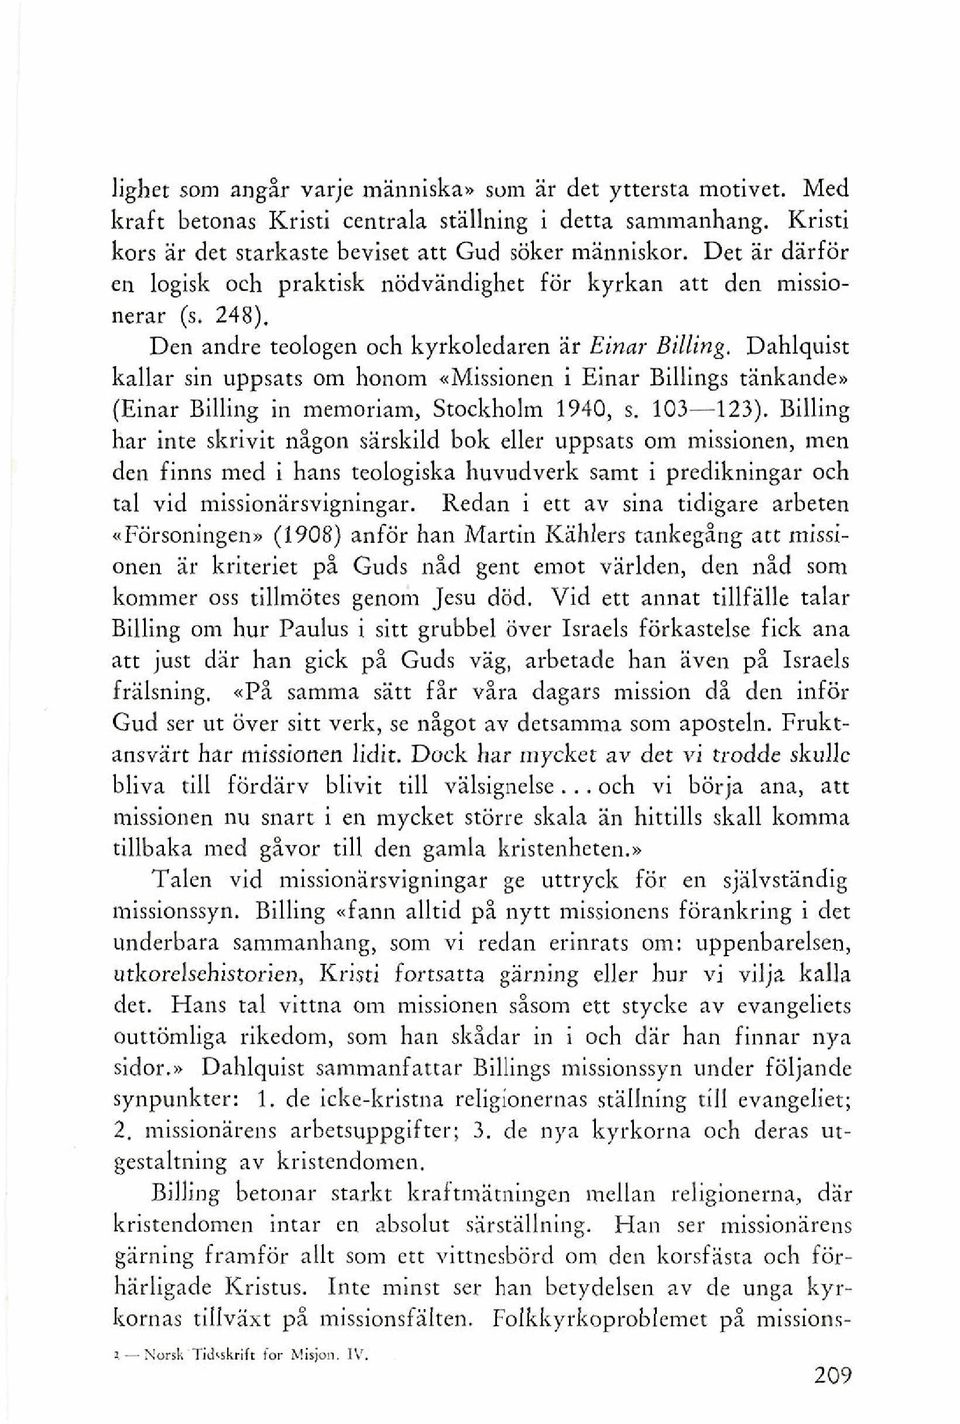 missionen i Einar Billings tankandea (Einar Billing in memoriam, Stockholm 1940, s. 103-123).